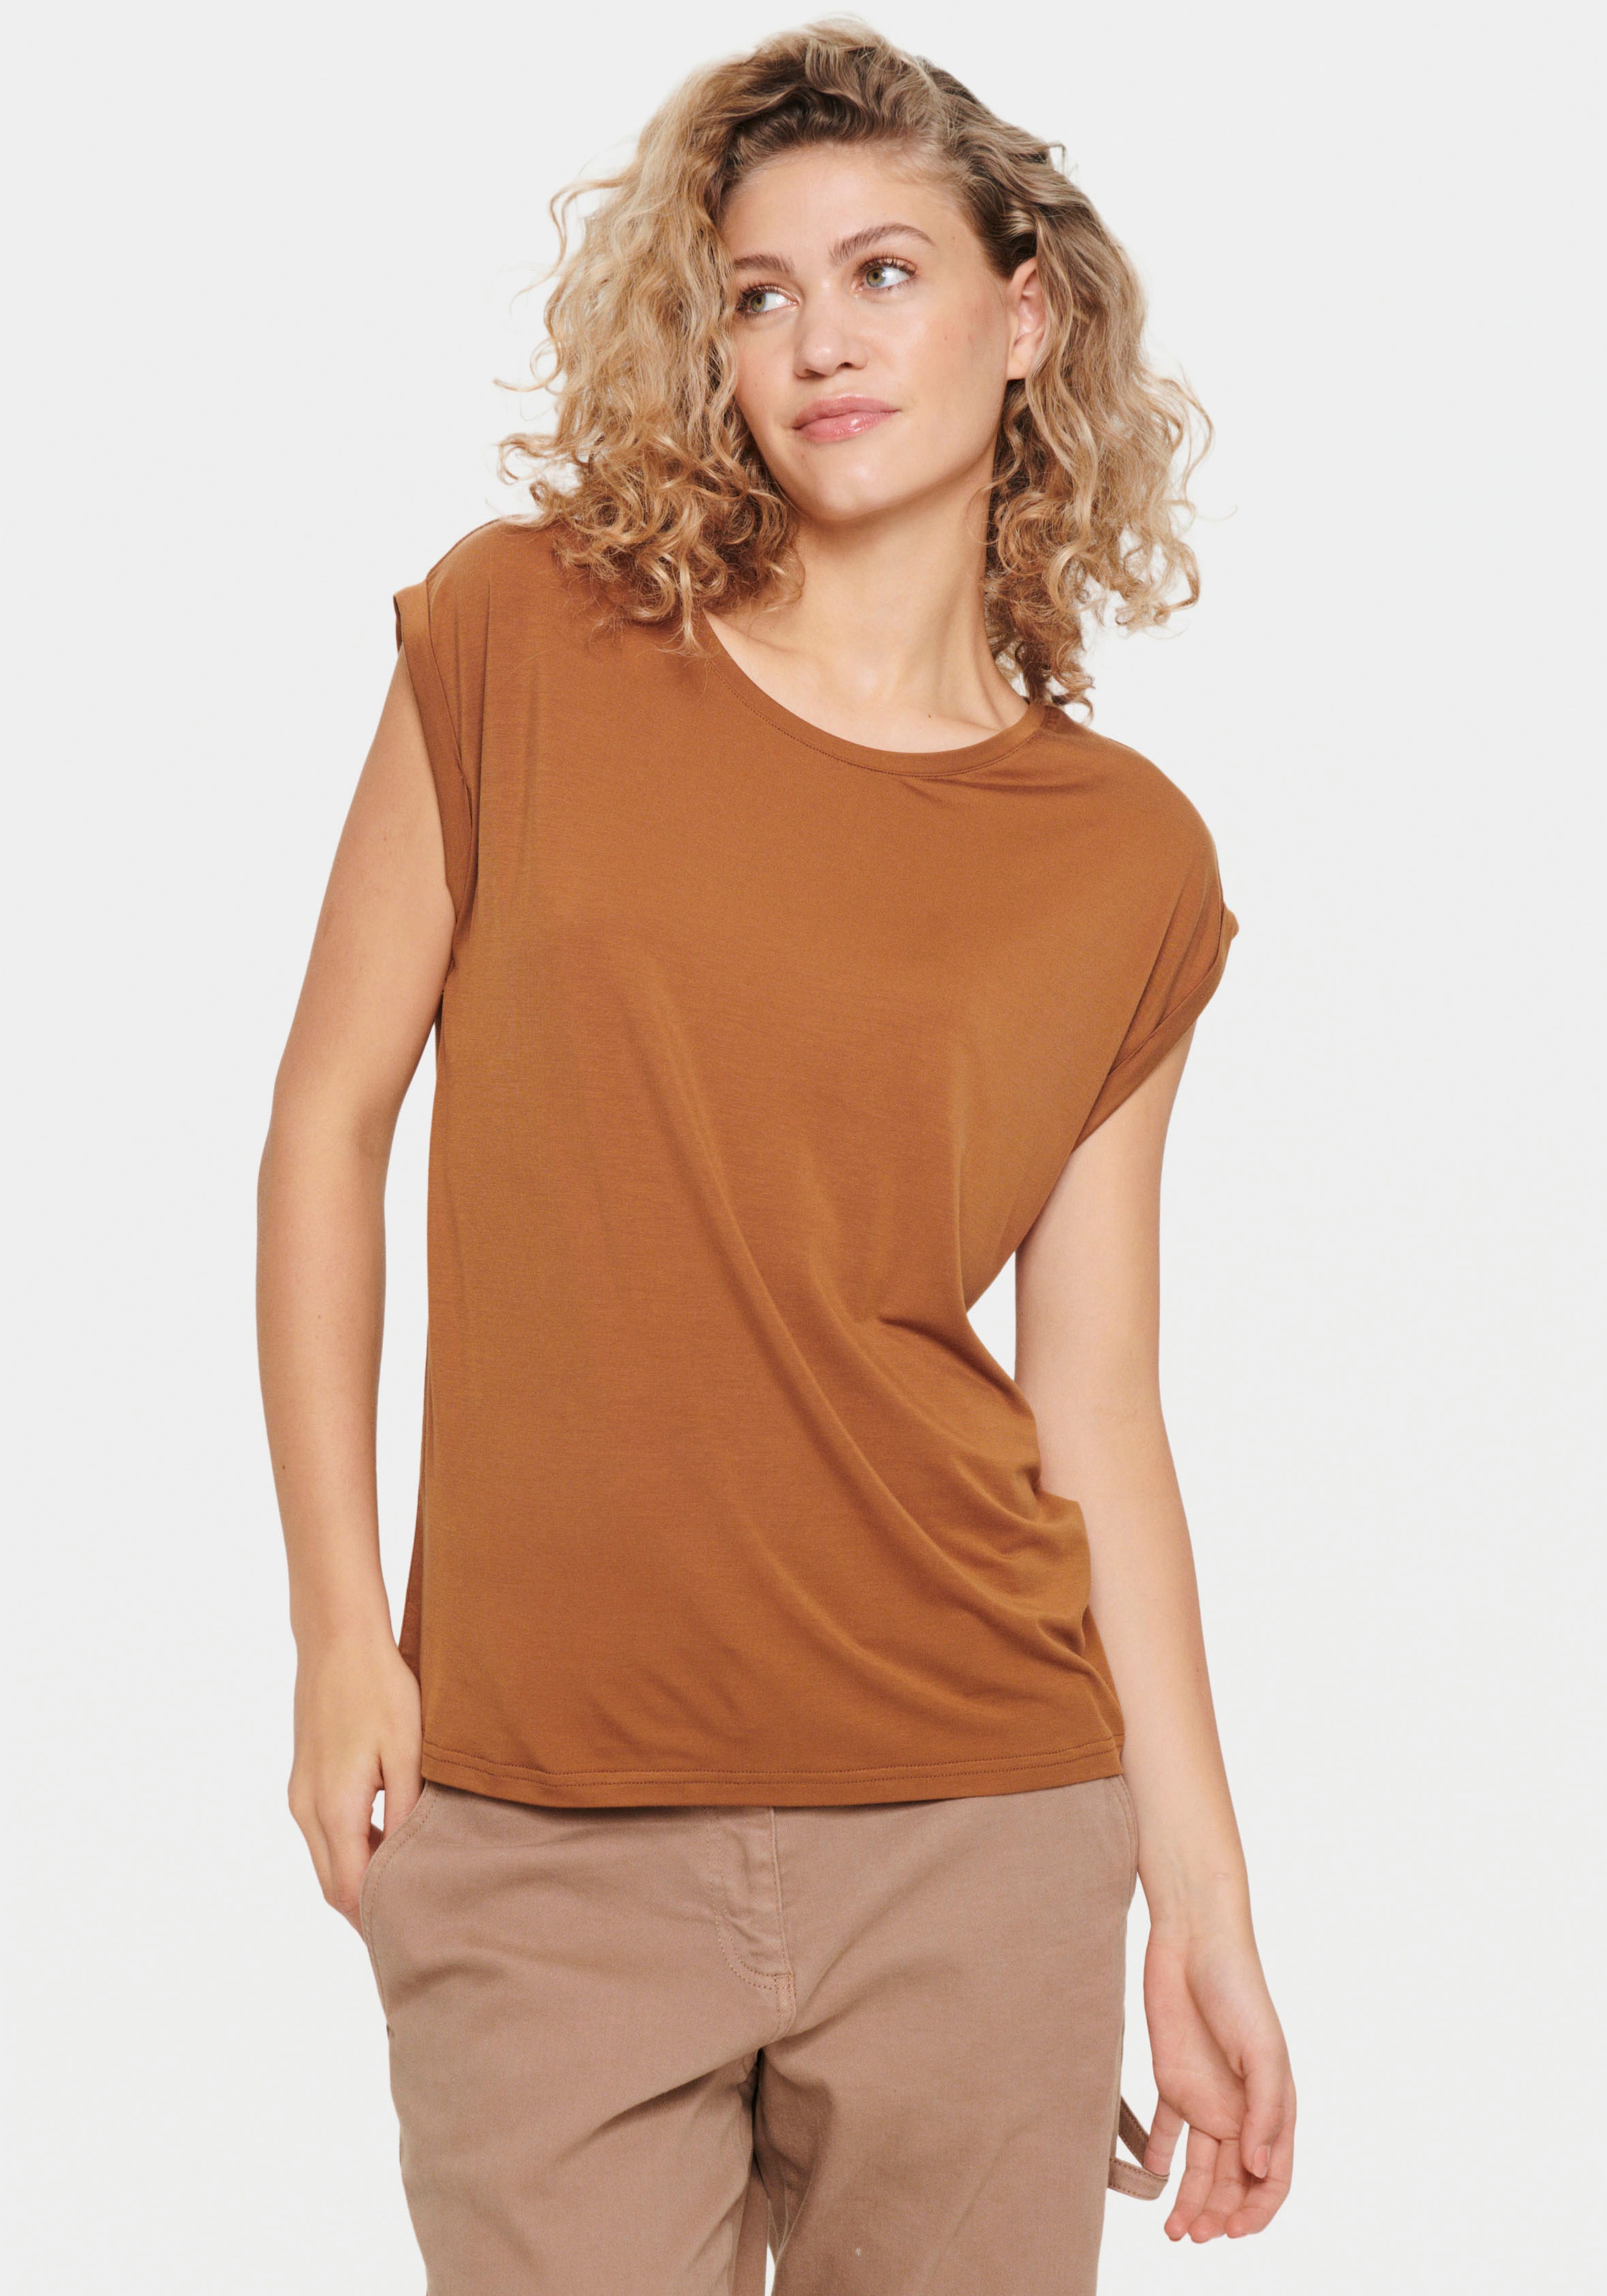 AdeliaSZ Saint Kurzarmshirt im Online-Shop kaufen »U1520, Tropez T-Shirt«